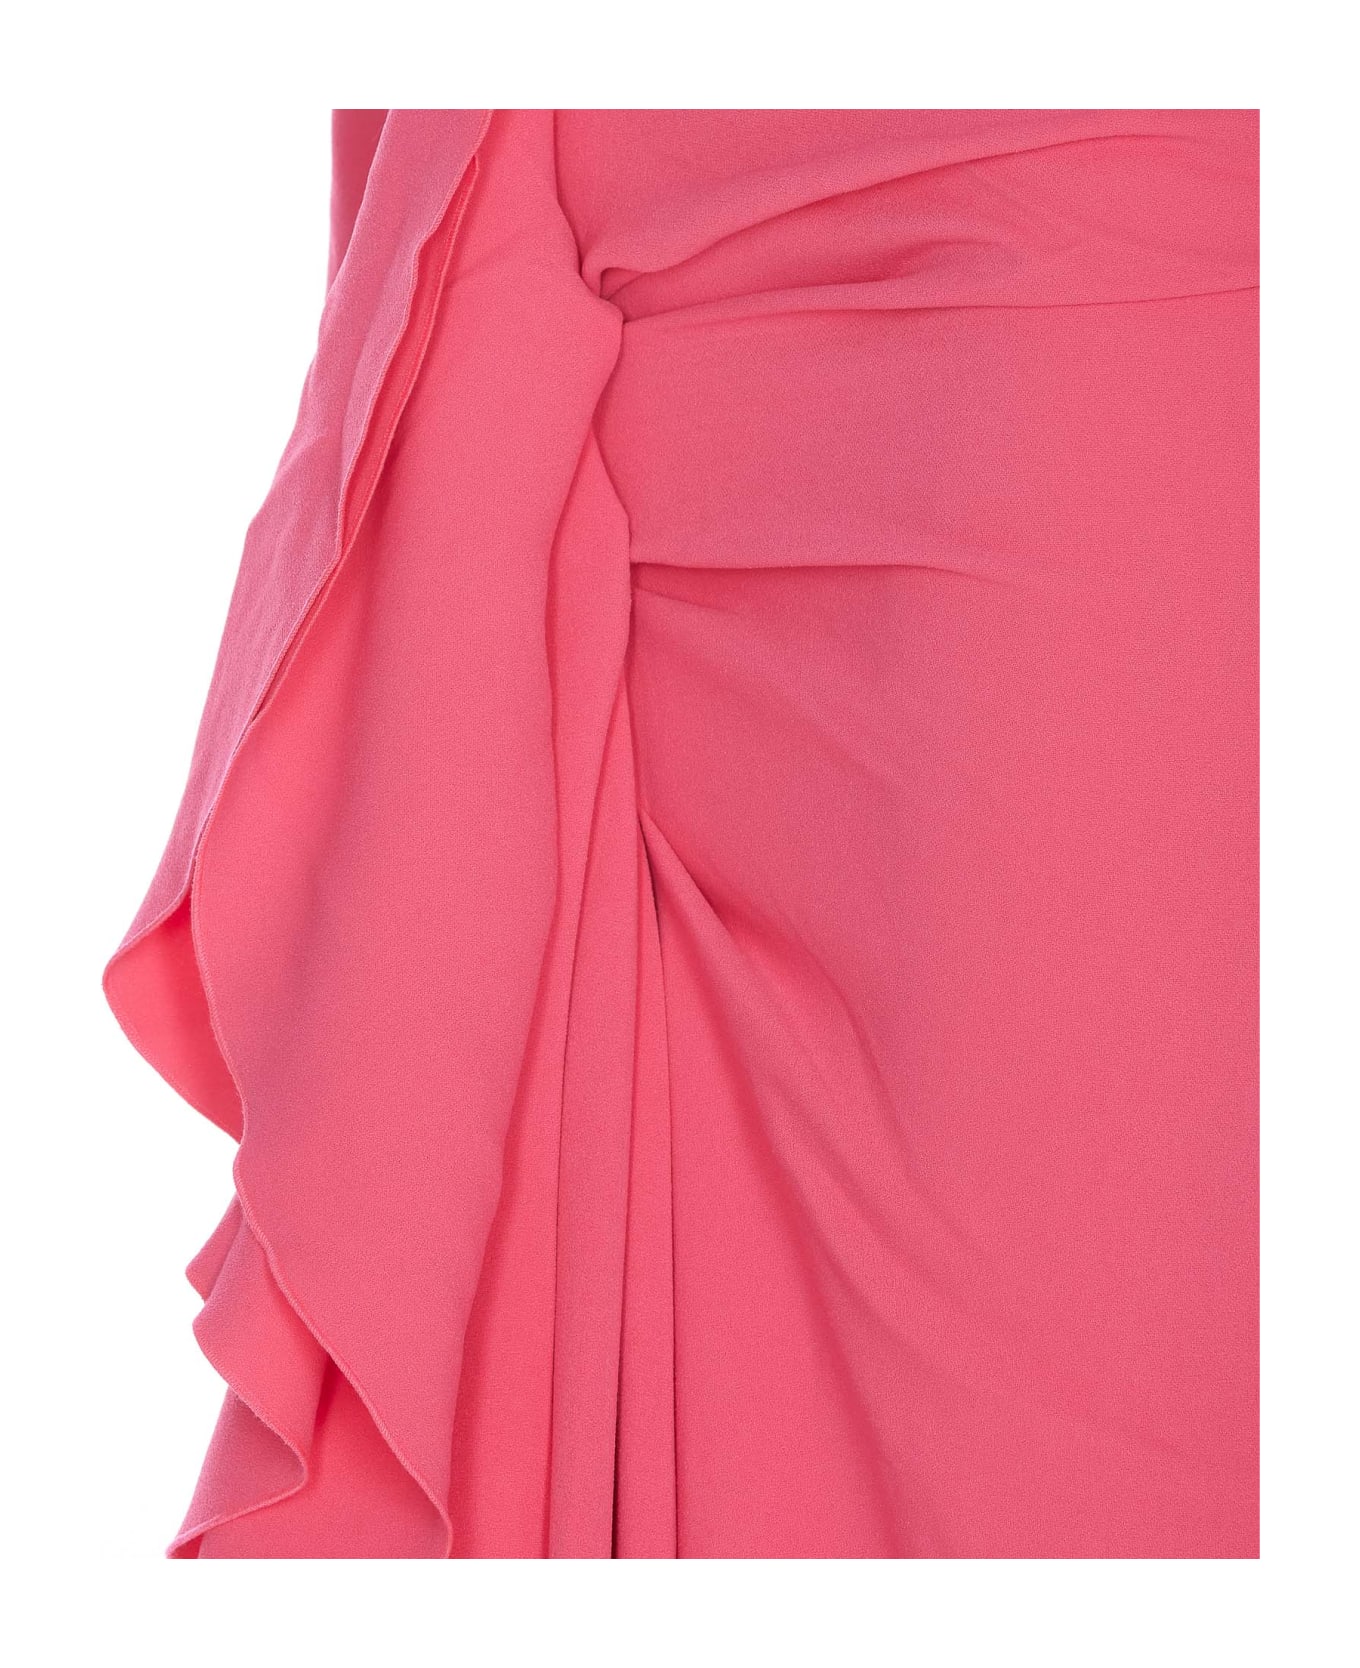 Solace London Nia Maxi Dress - Pink ワンピース＆ドレス